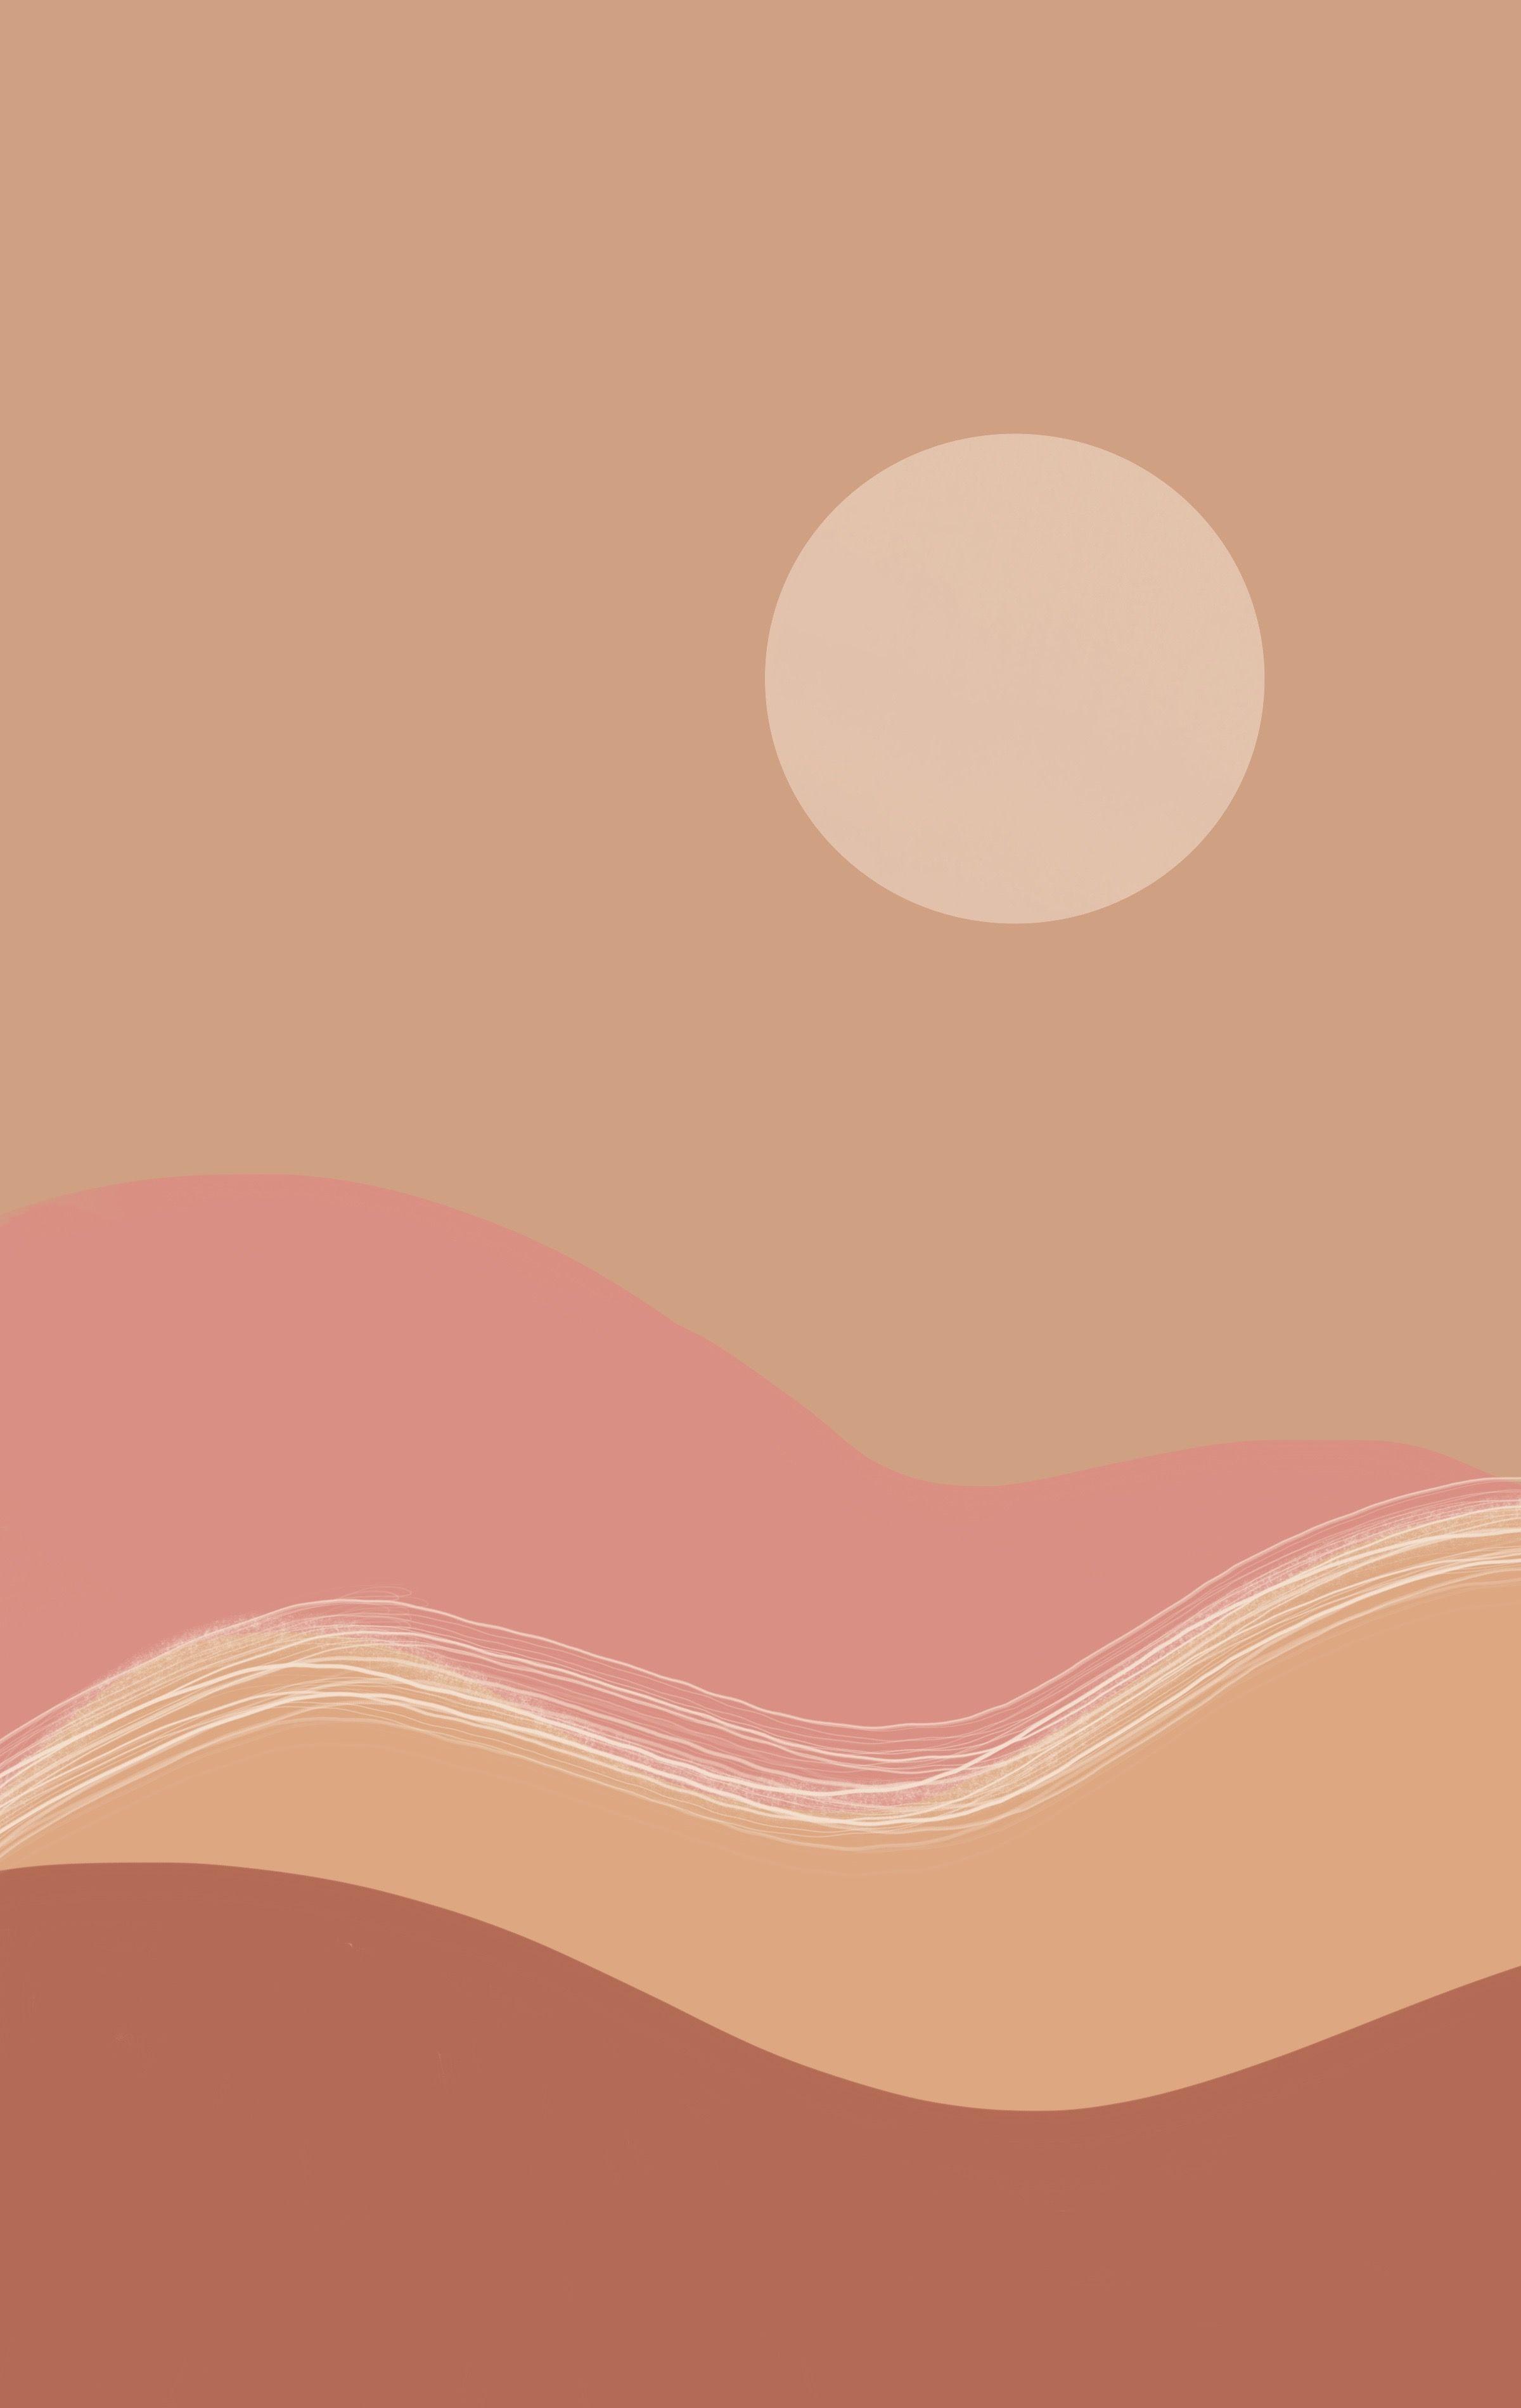 9 iOS MinimalistBeigeNeutral Wallpaper and App Icons for your Home  Screens  STRAPHIE  Геометрический постер Цветочная живопись на холсте  Пейзажи